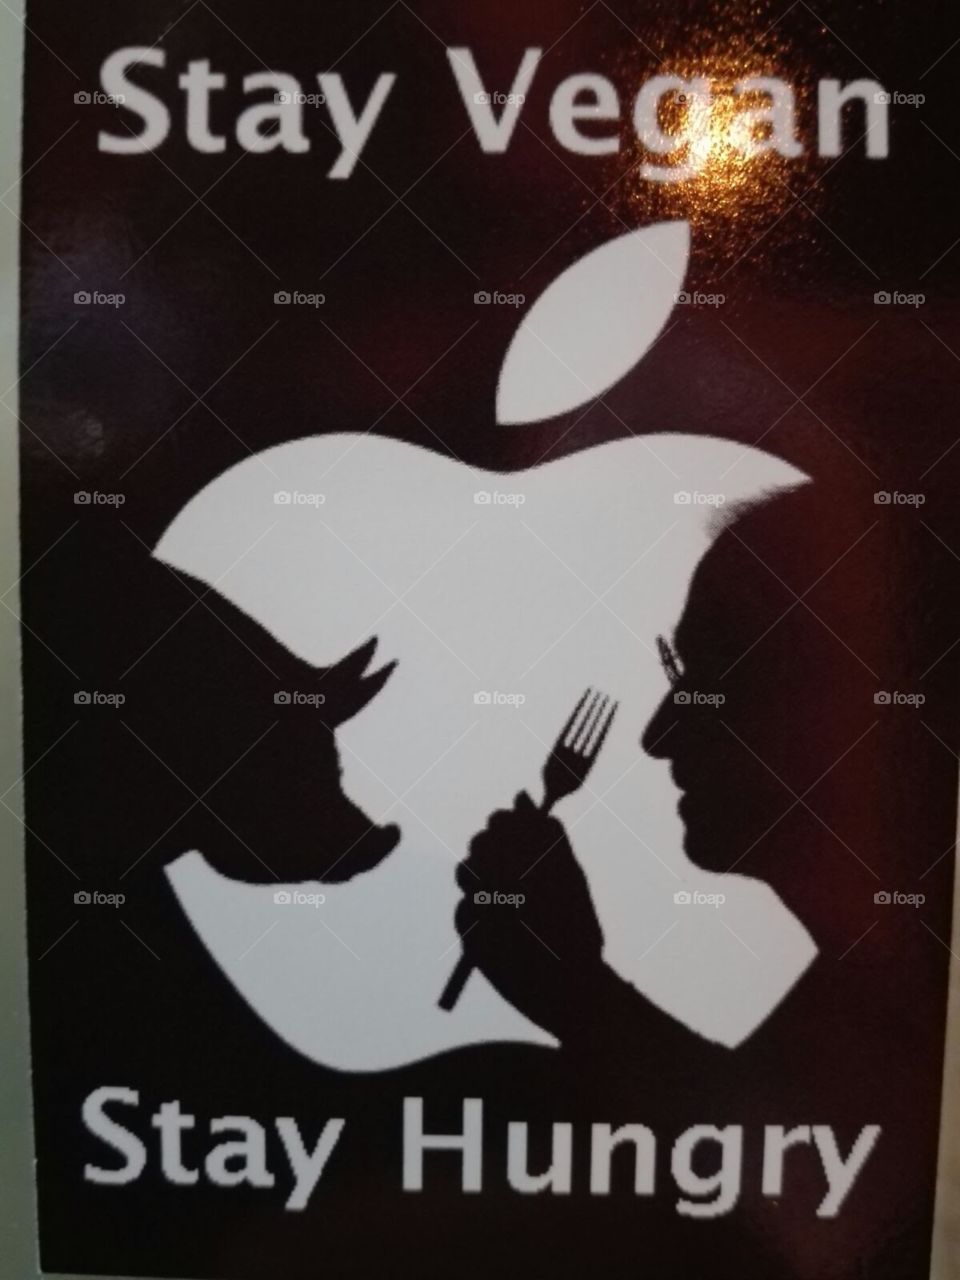 Apple?